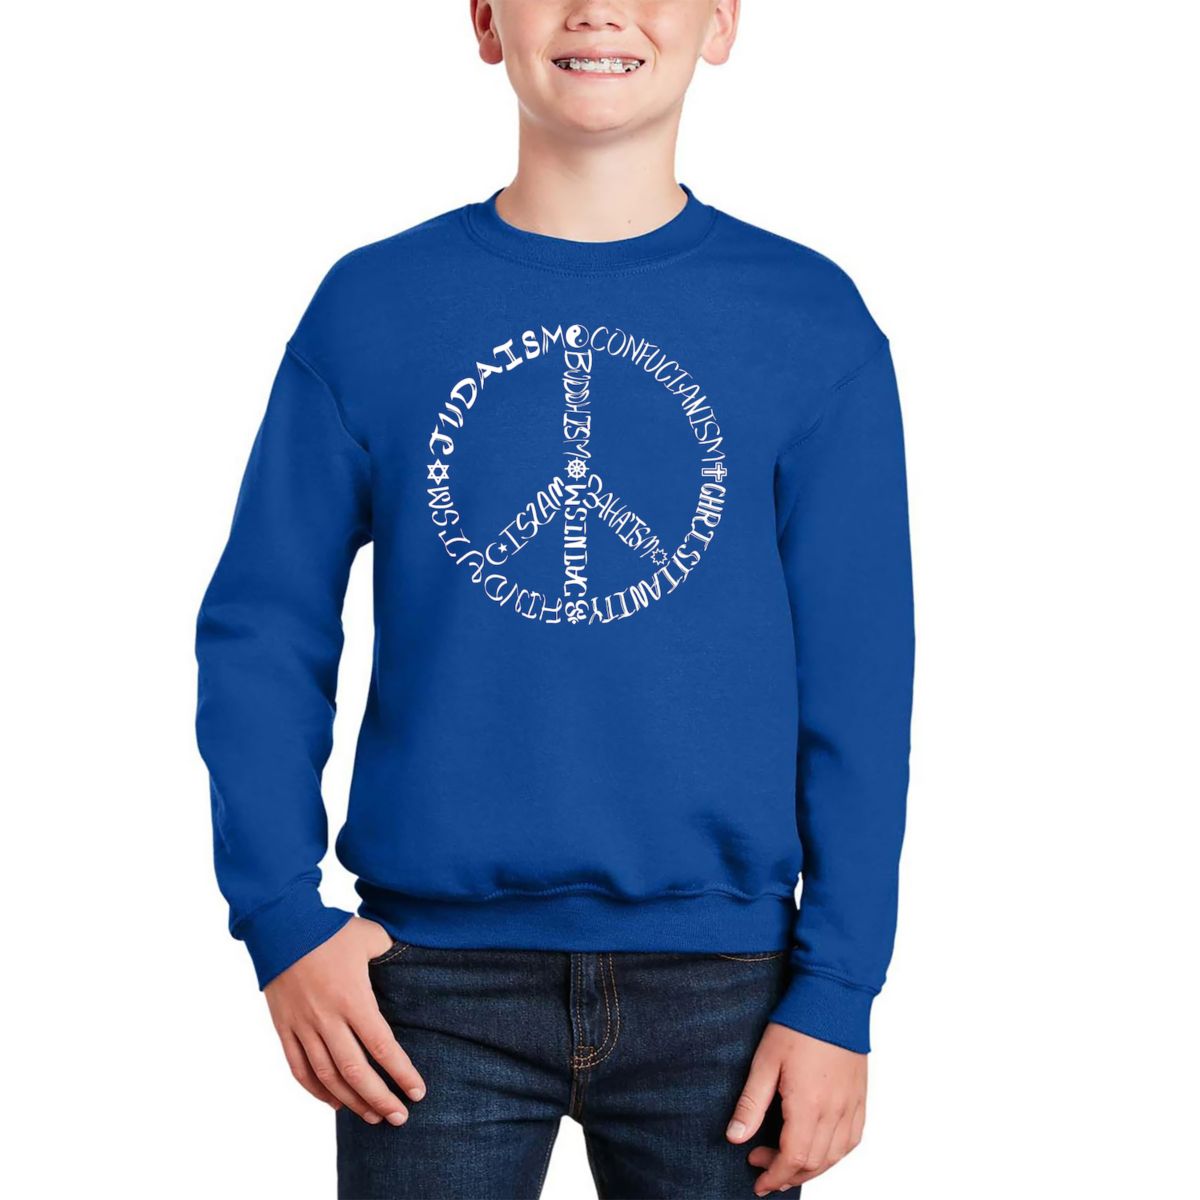 Different Faiths Peace Sign - Boy's Word Art Crewneck Sweatshirt LA Pop Art